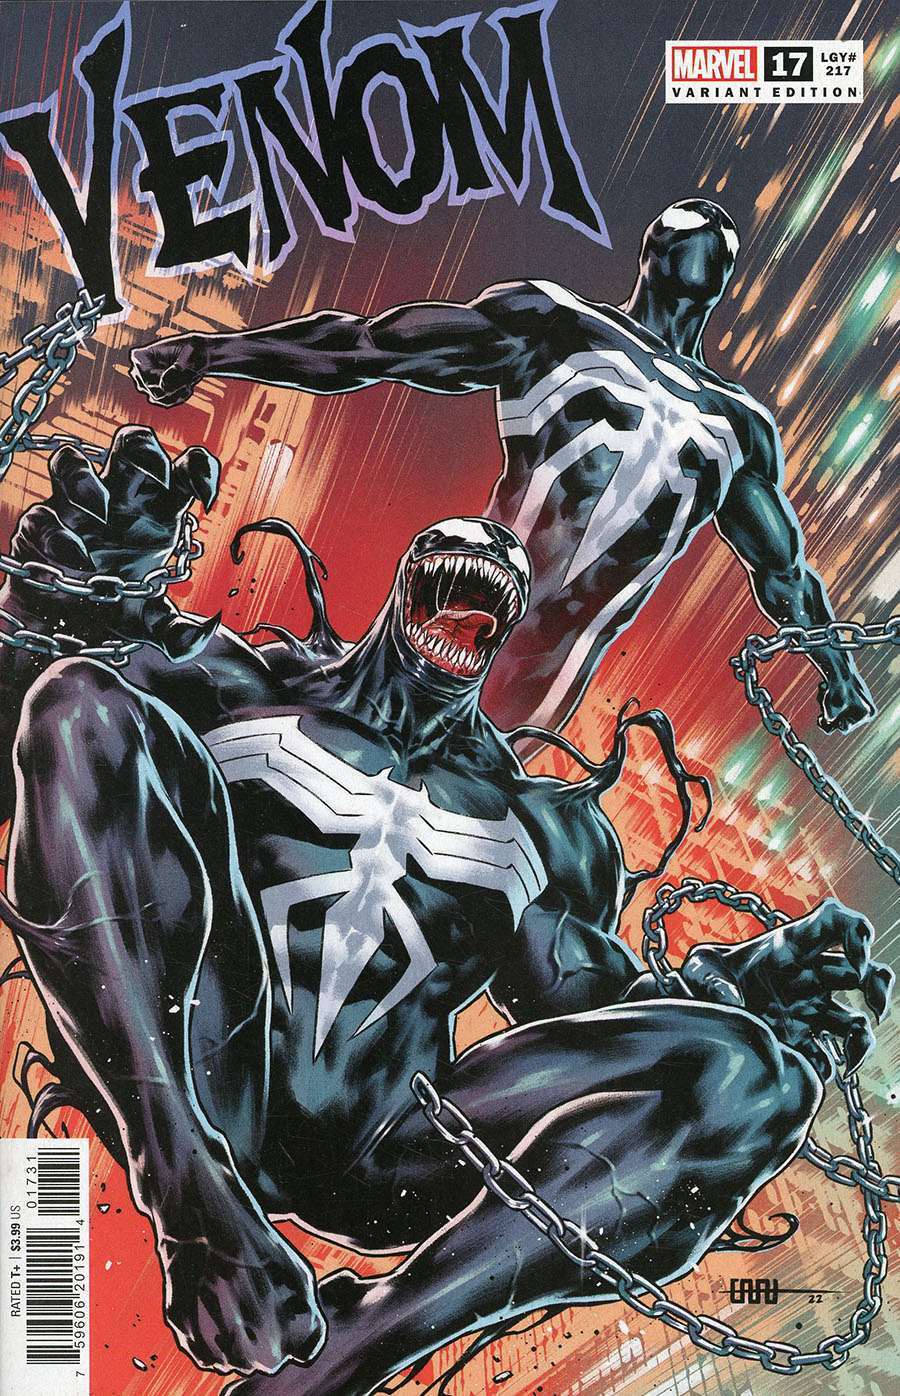 Venom (5th Series) #17B VF/NM; Marvel | 217 1:25 Variant - we combine shipping